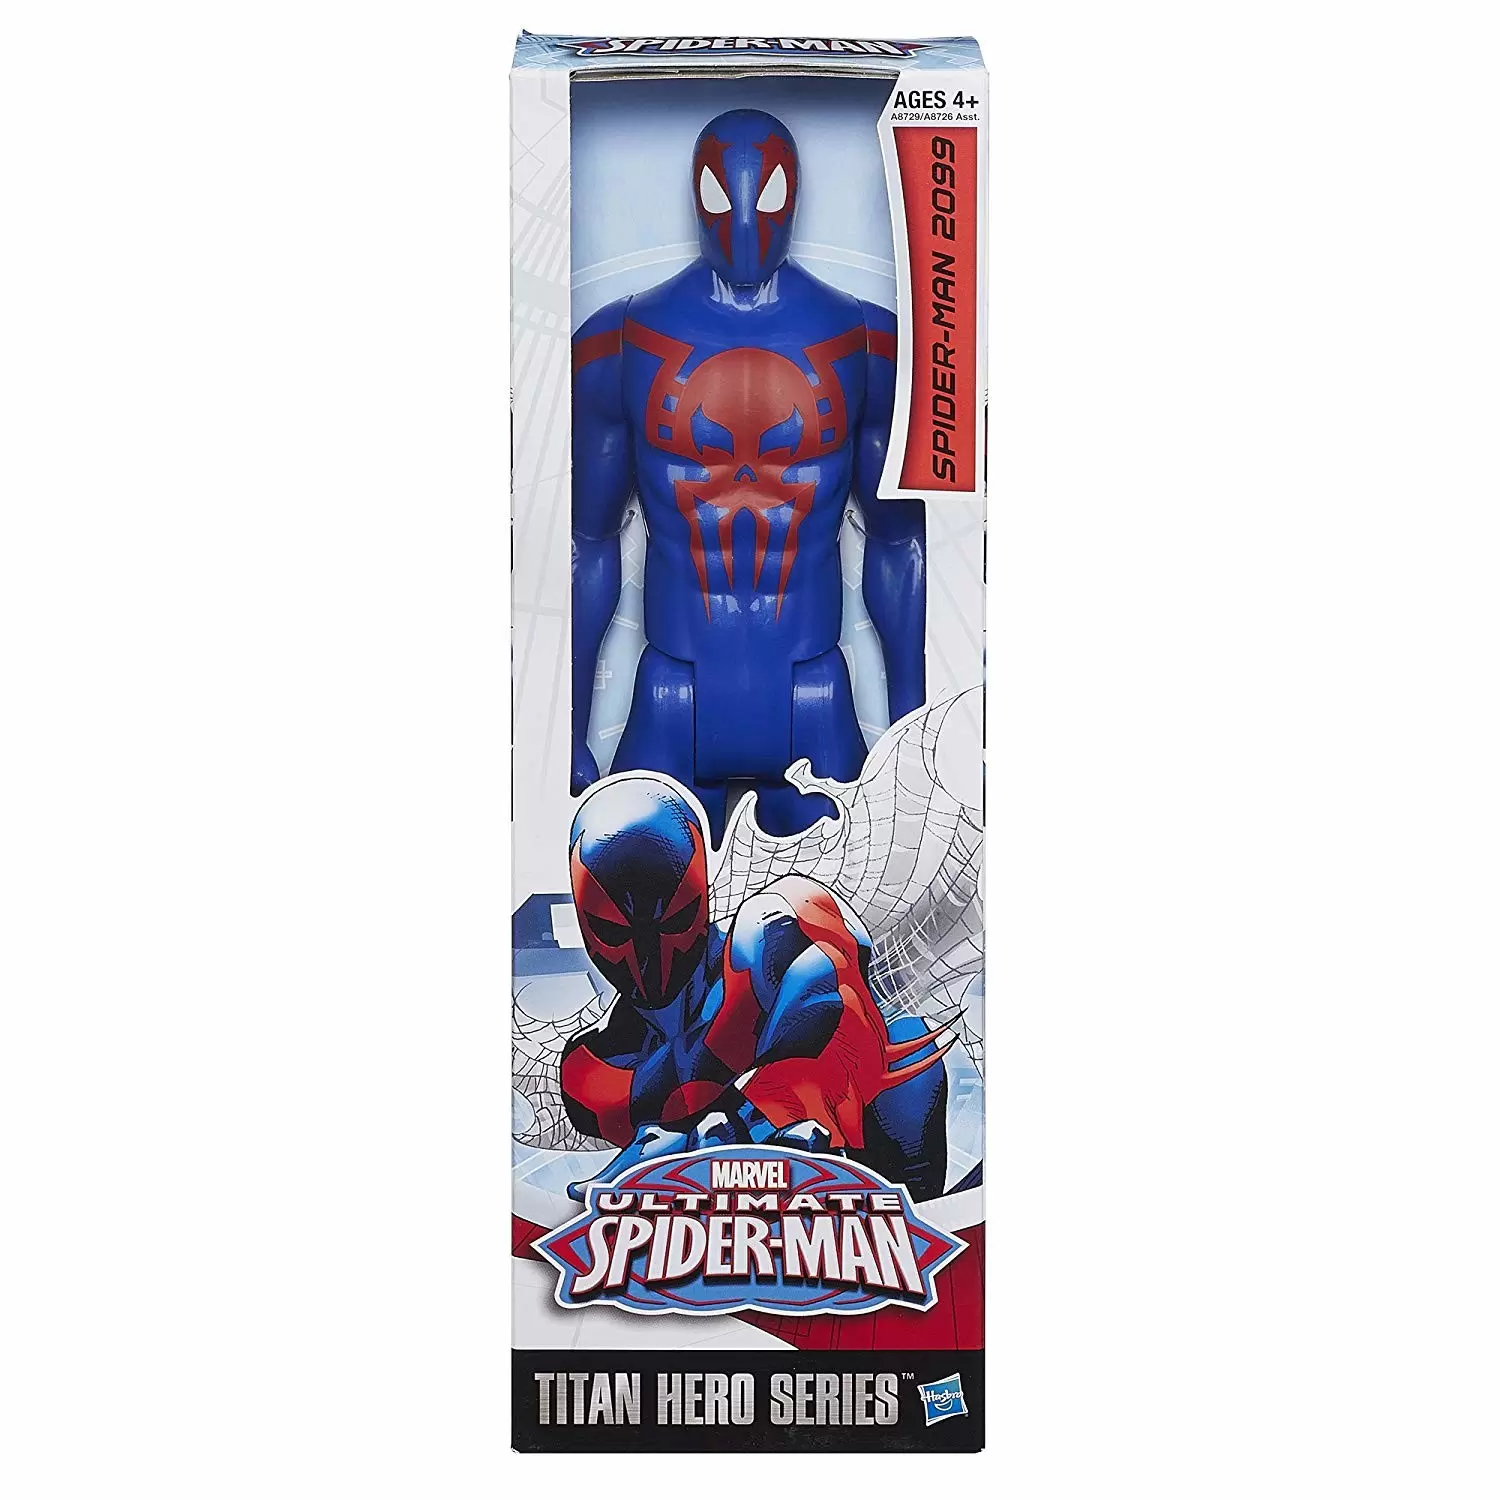 Titan Hero Series - Spider-Man 2099